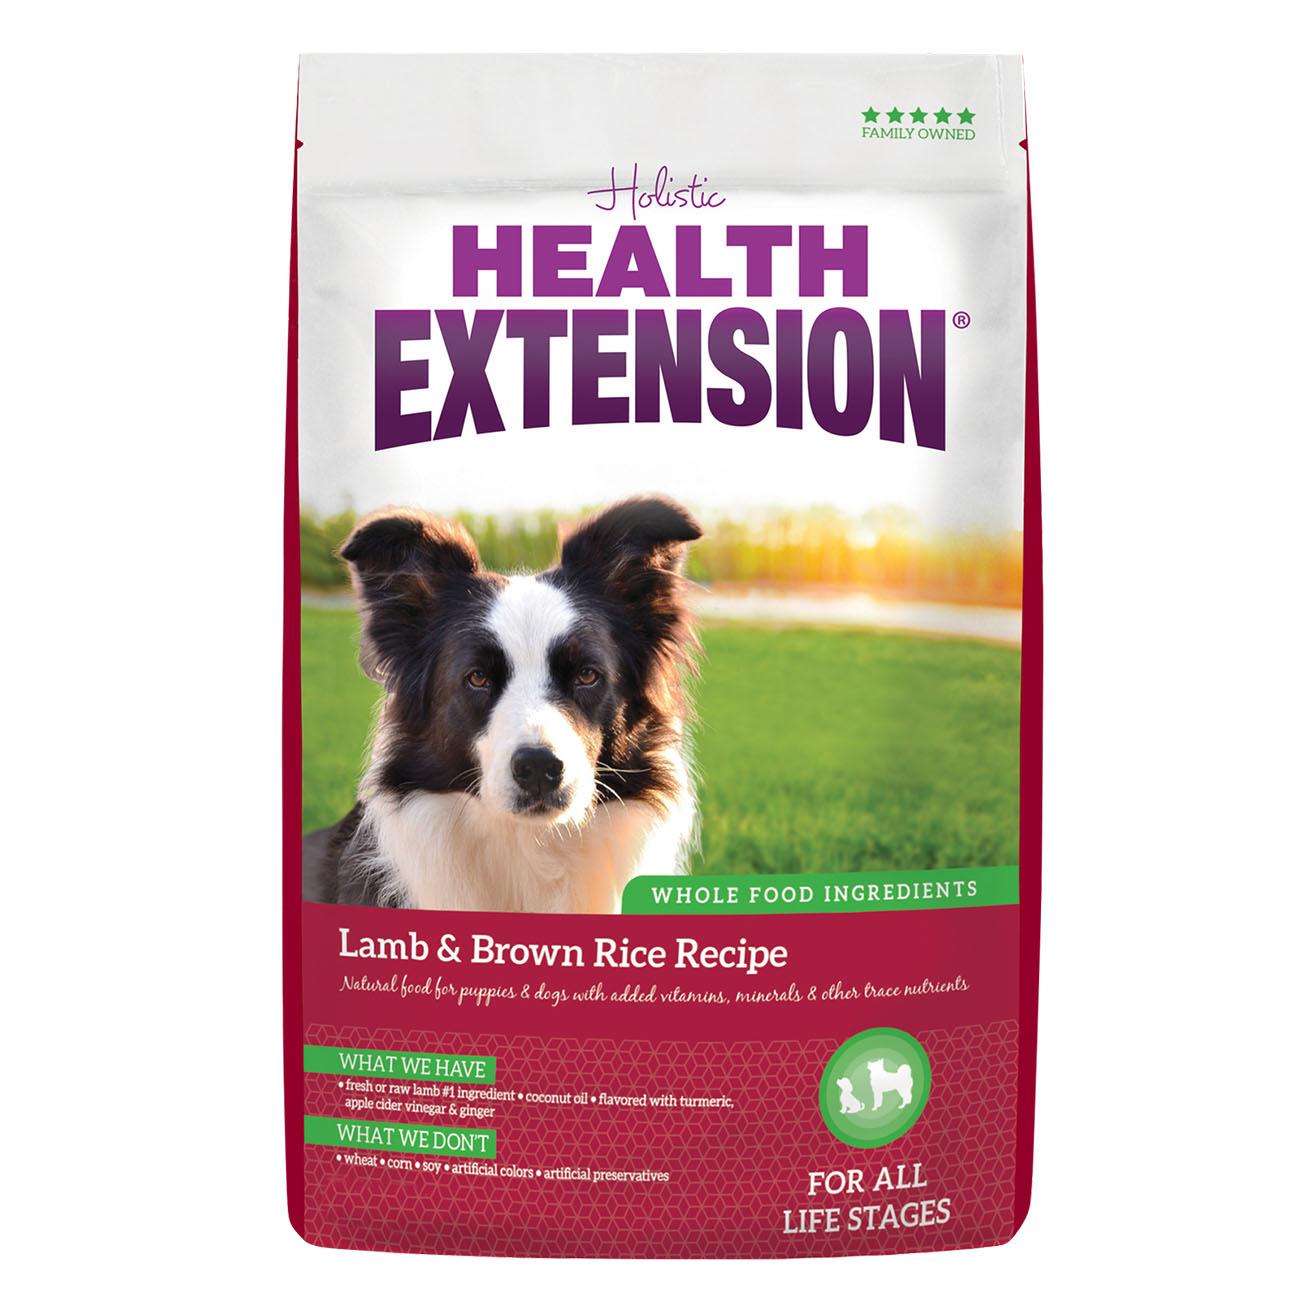 Health Extension Lamb & Brown Rice Recipe Dry Dog Food